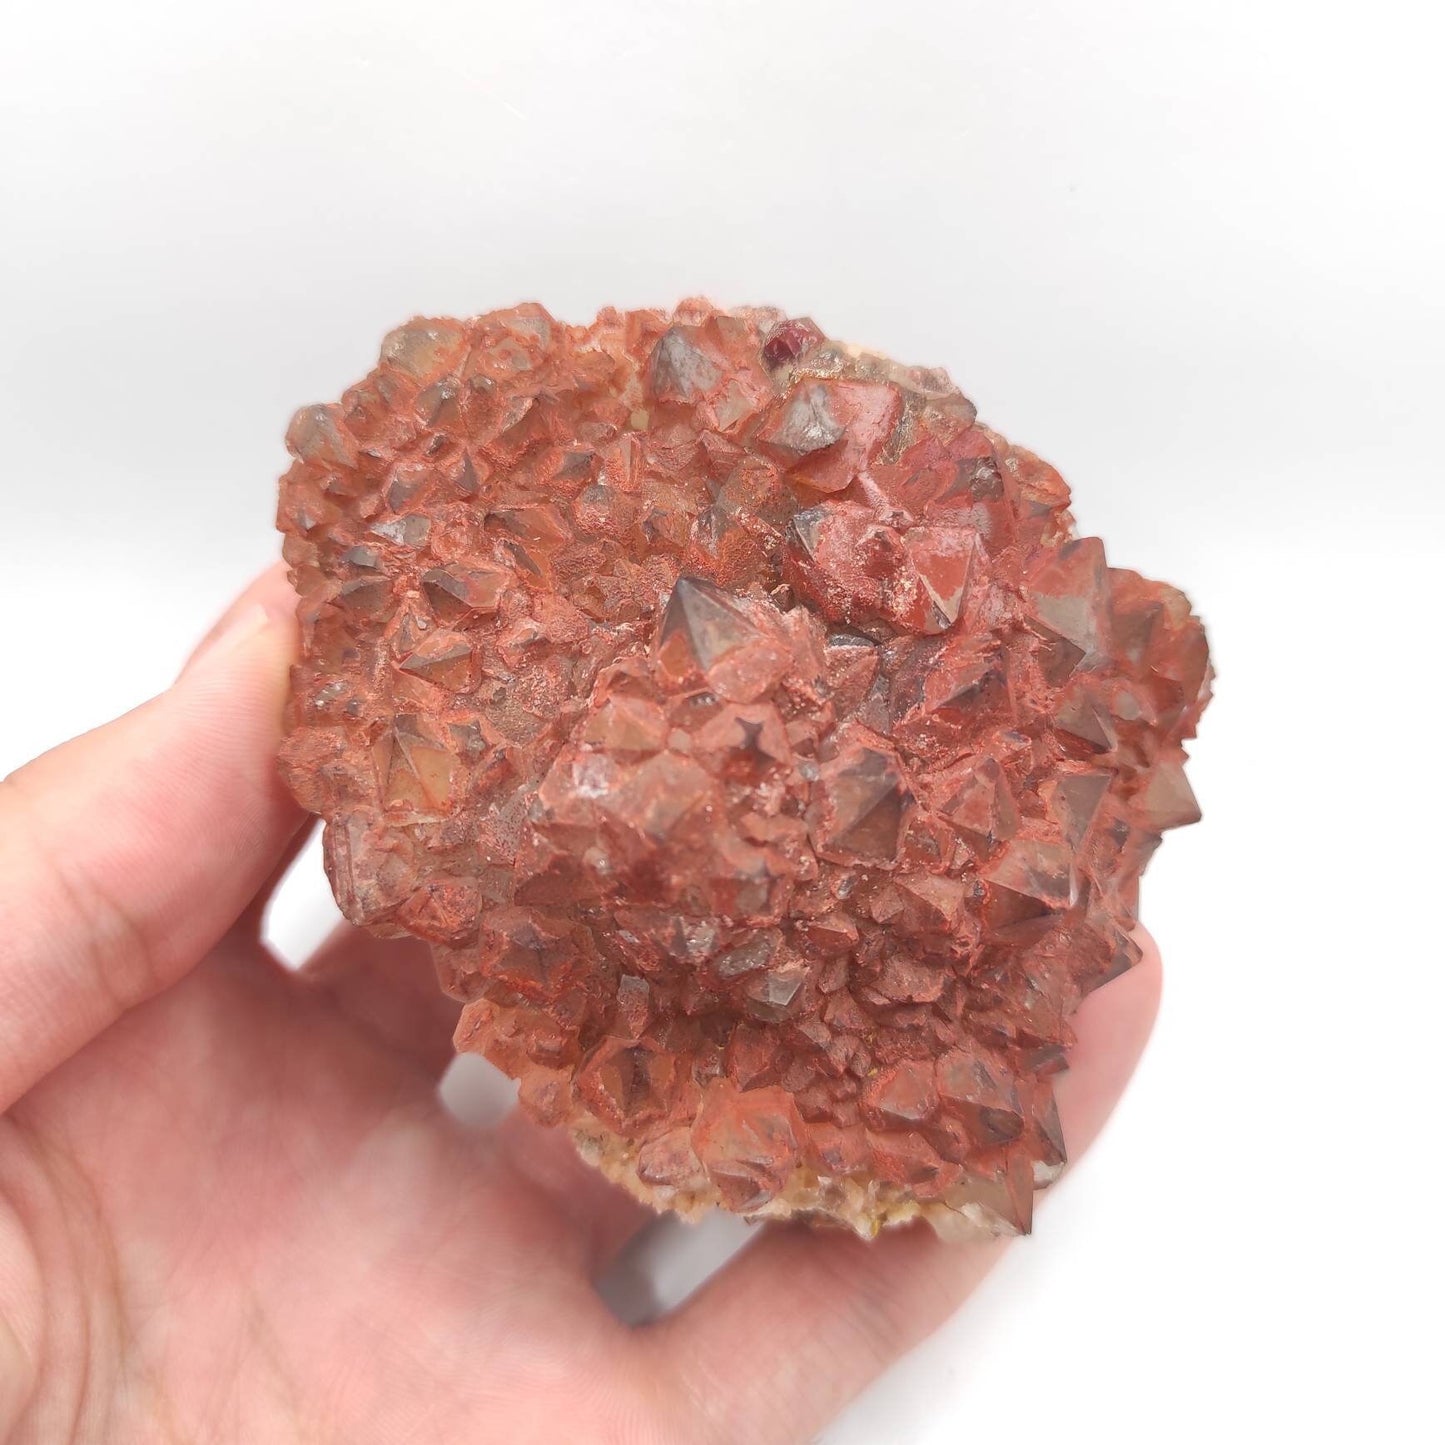 287g Hematite Quartz from Tinjdad, Morocco - Natural Red Hematite Quartz Crystal - Hematite Crystals - Raw Quartz Cluster - Rough Minerals